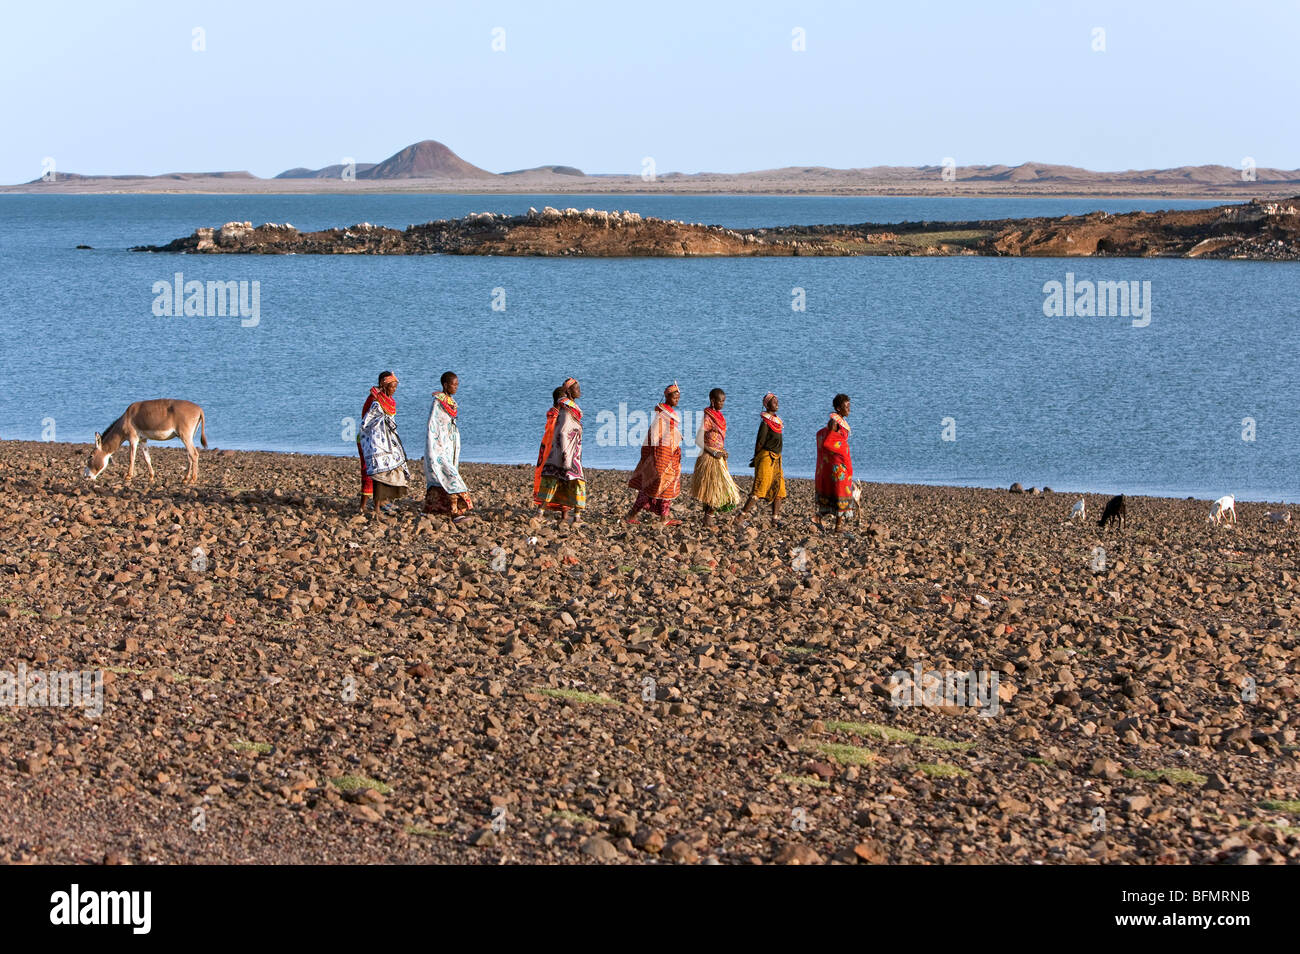 A group of El Molo women walk along the barren shoreline of Lake Turkana s El Molo Bay. Stock Photo